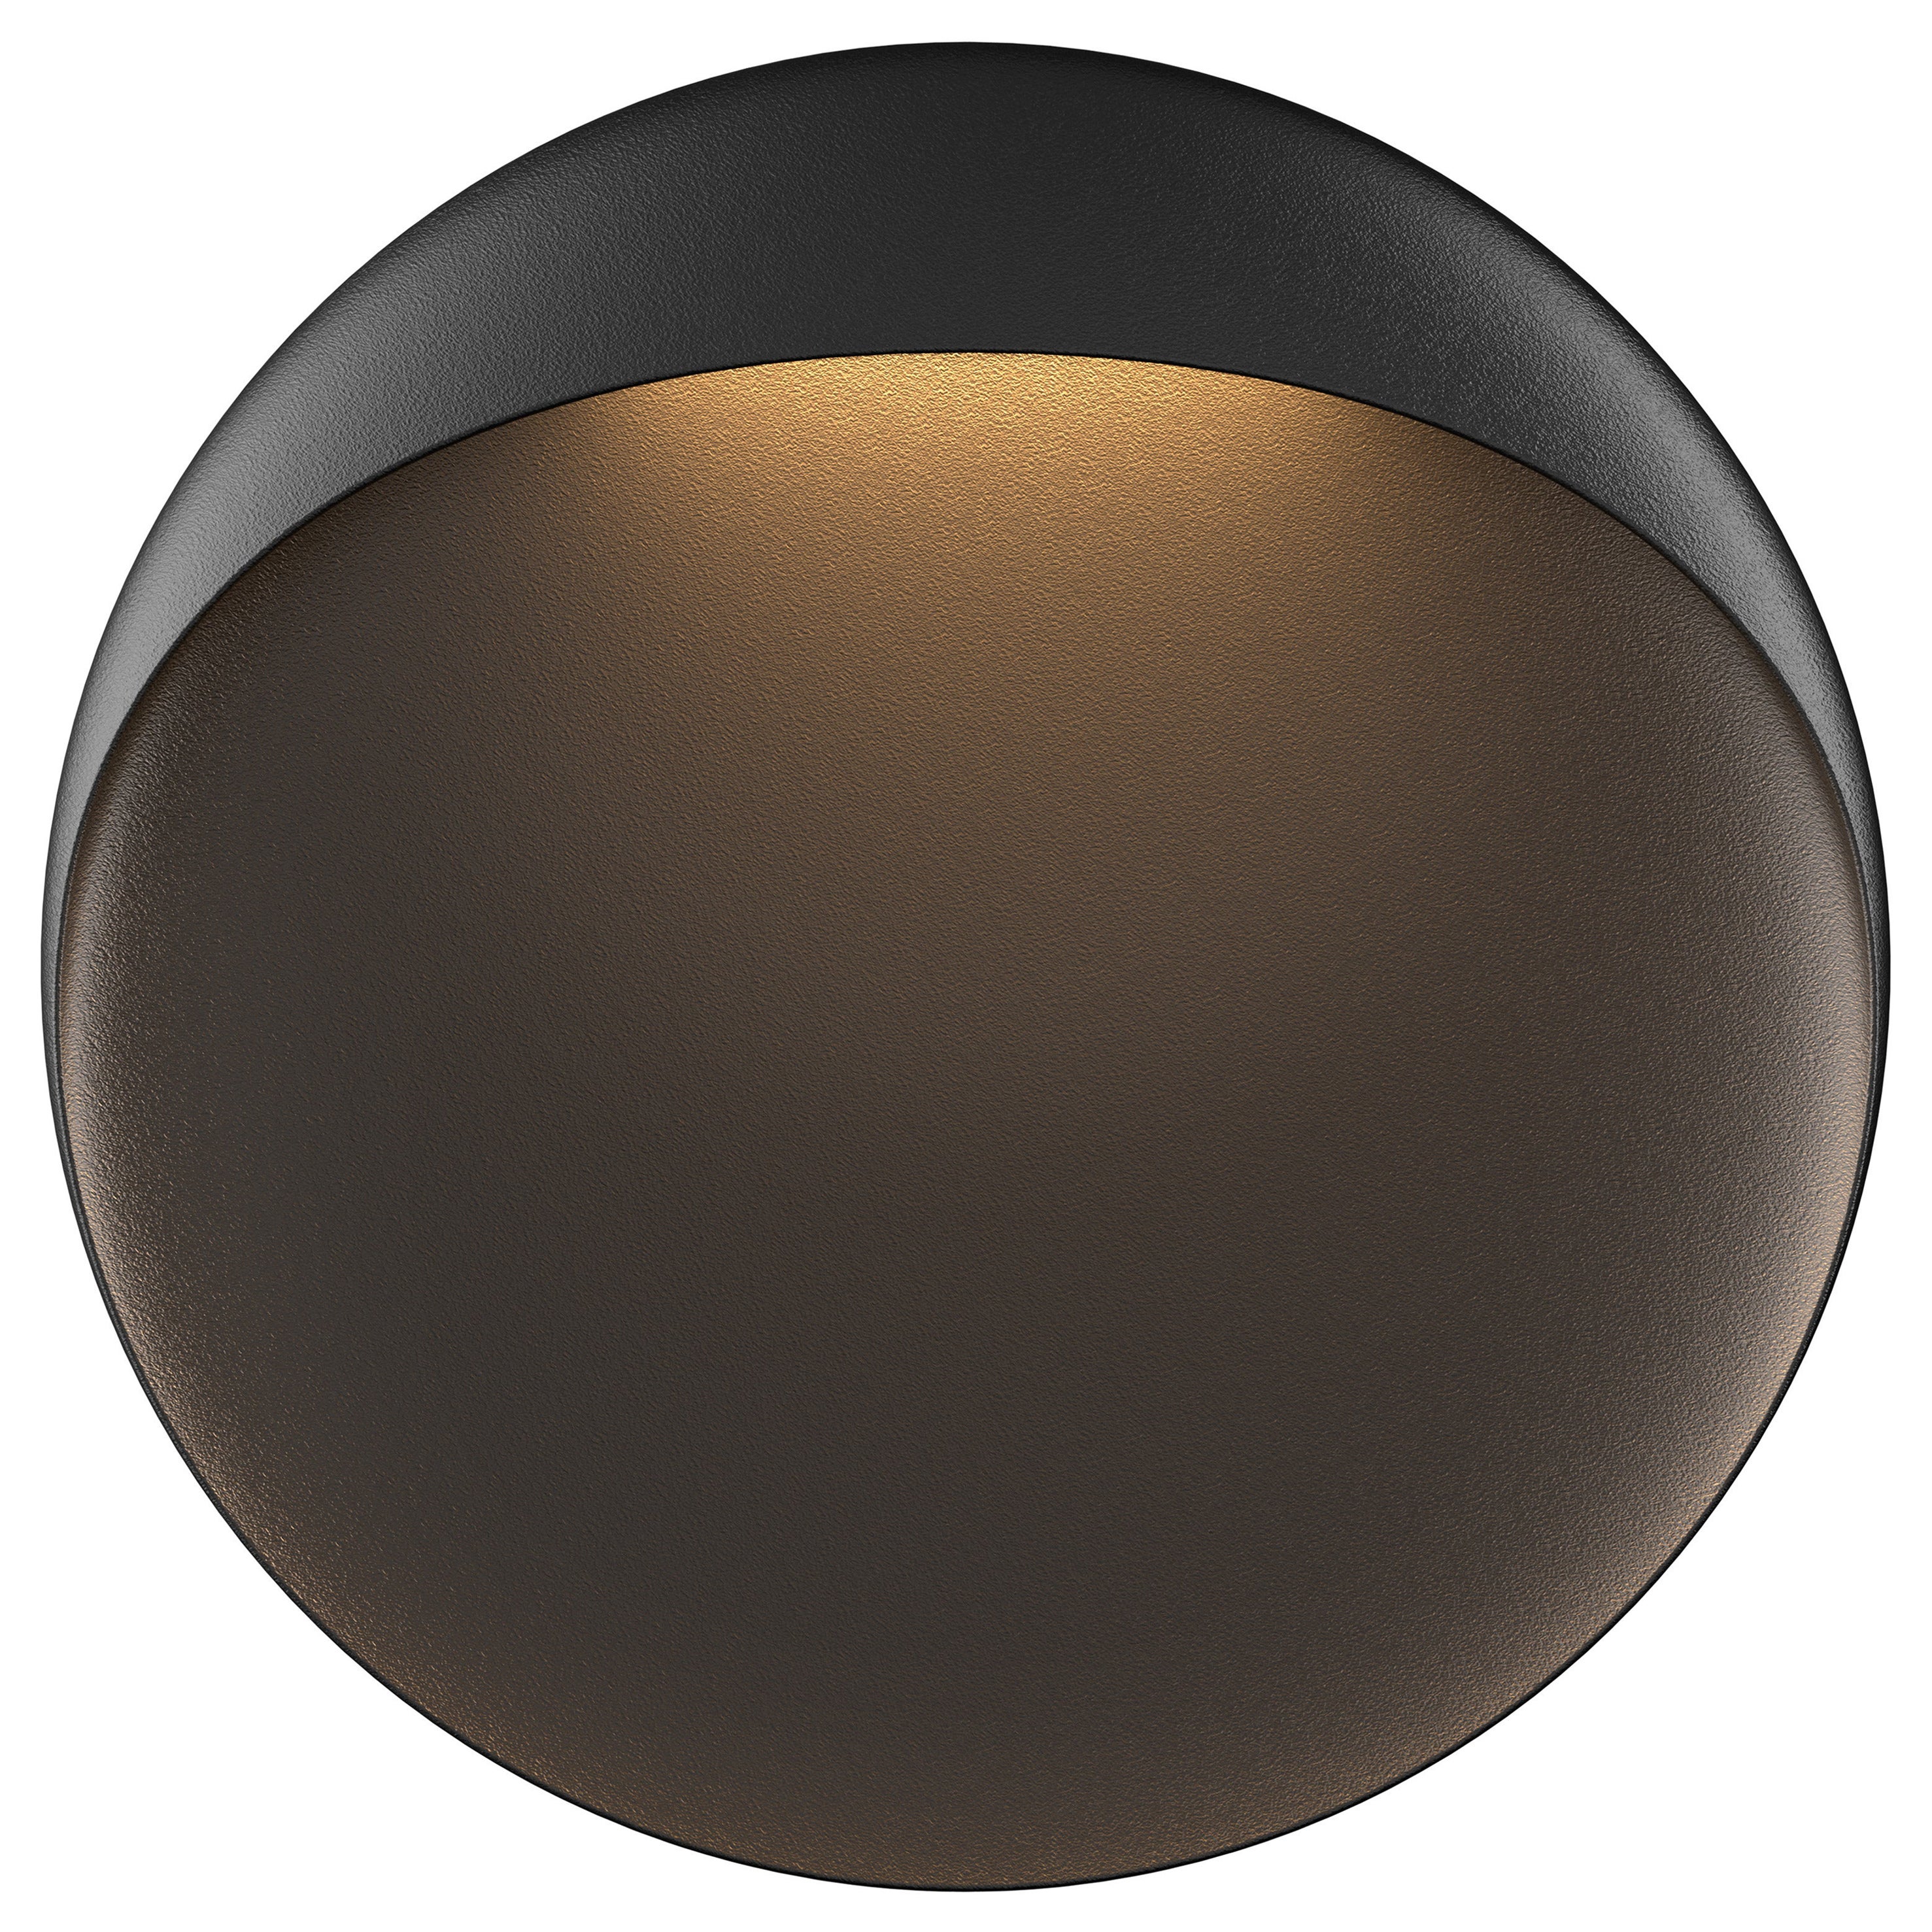 'Flindt' Indoor or Outdoor Wall Light in Black for Louis Poulsen For Sale